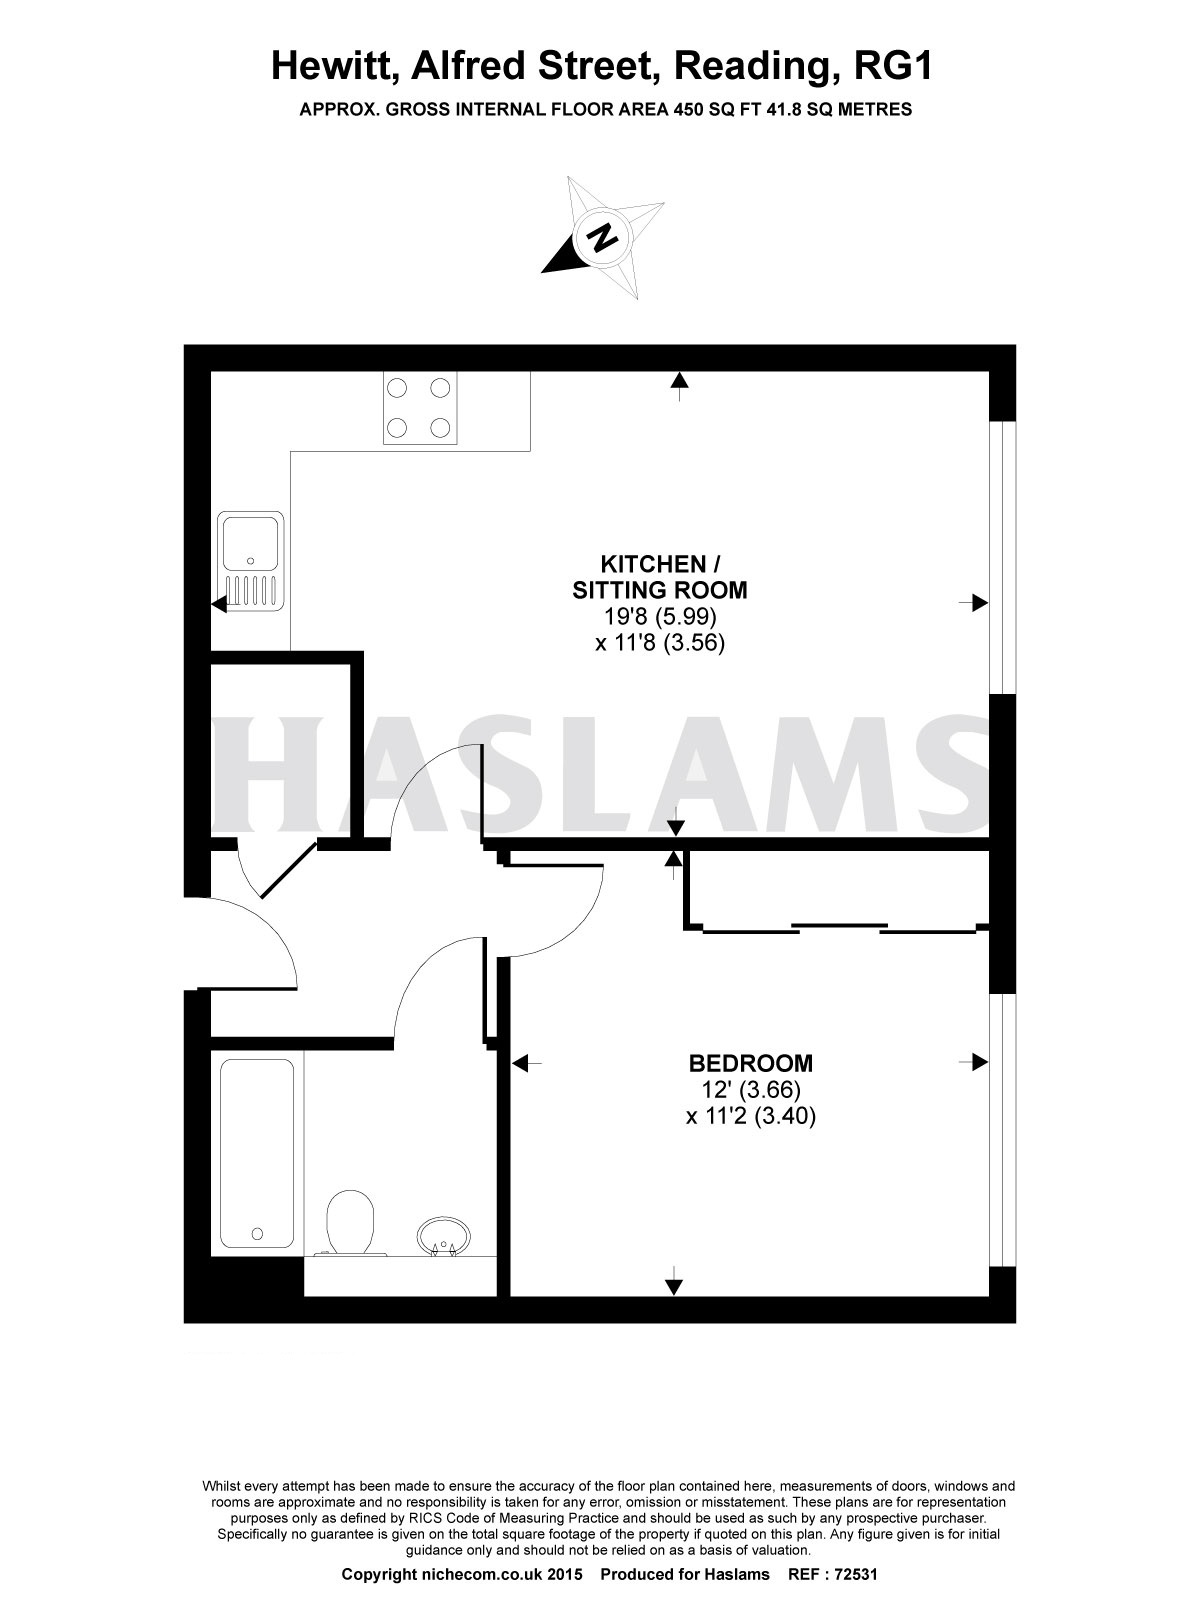 1 Bedrooms Flat to rent in Hewitt, Alfred Street, Reading RG1